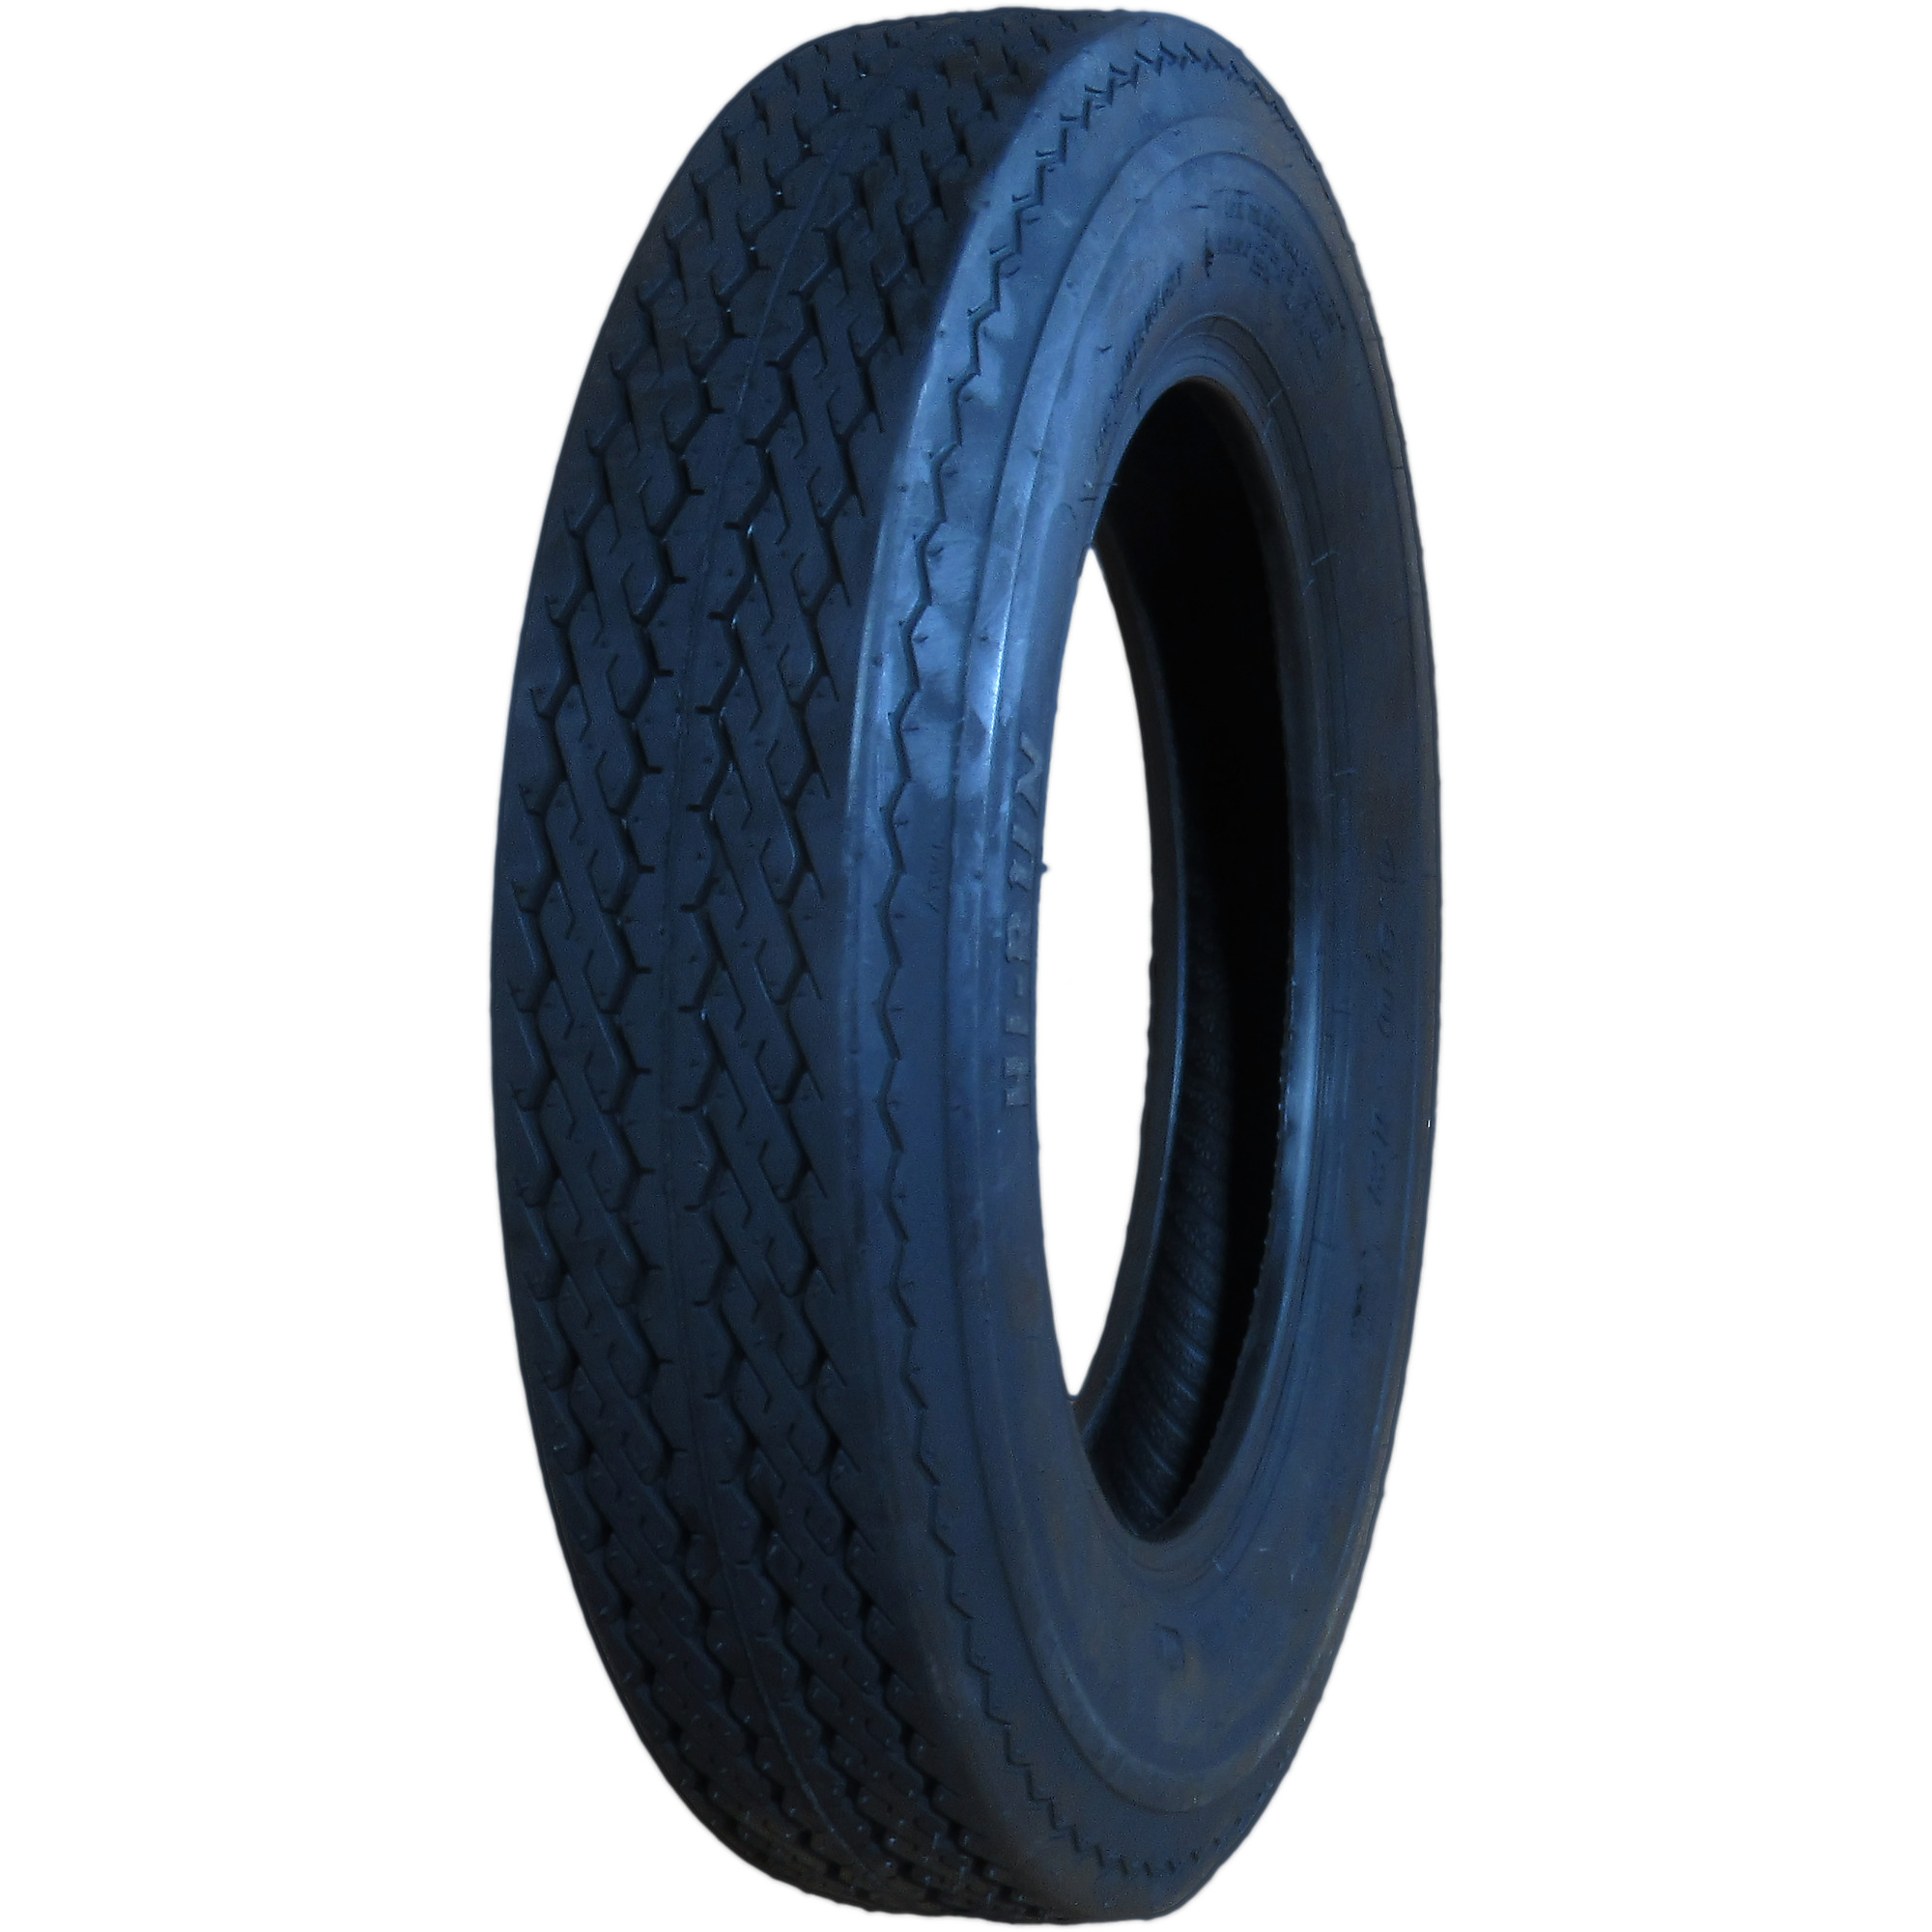 HI-RUN, Highway Trailer Tire, Bias-ply, Tire Size 5.70-8 Load Range Rating D, Model WD1010